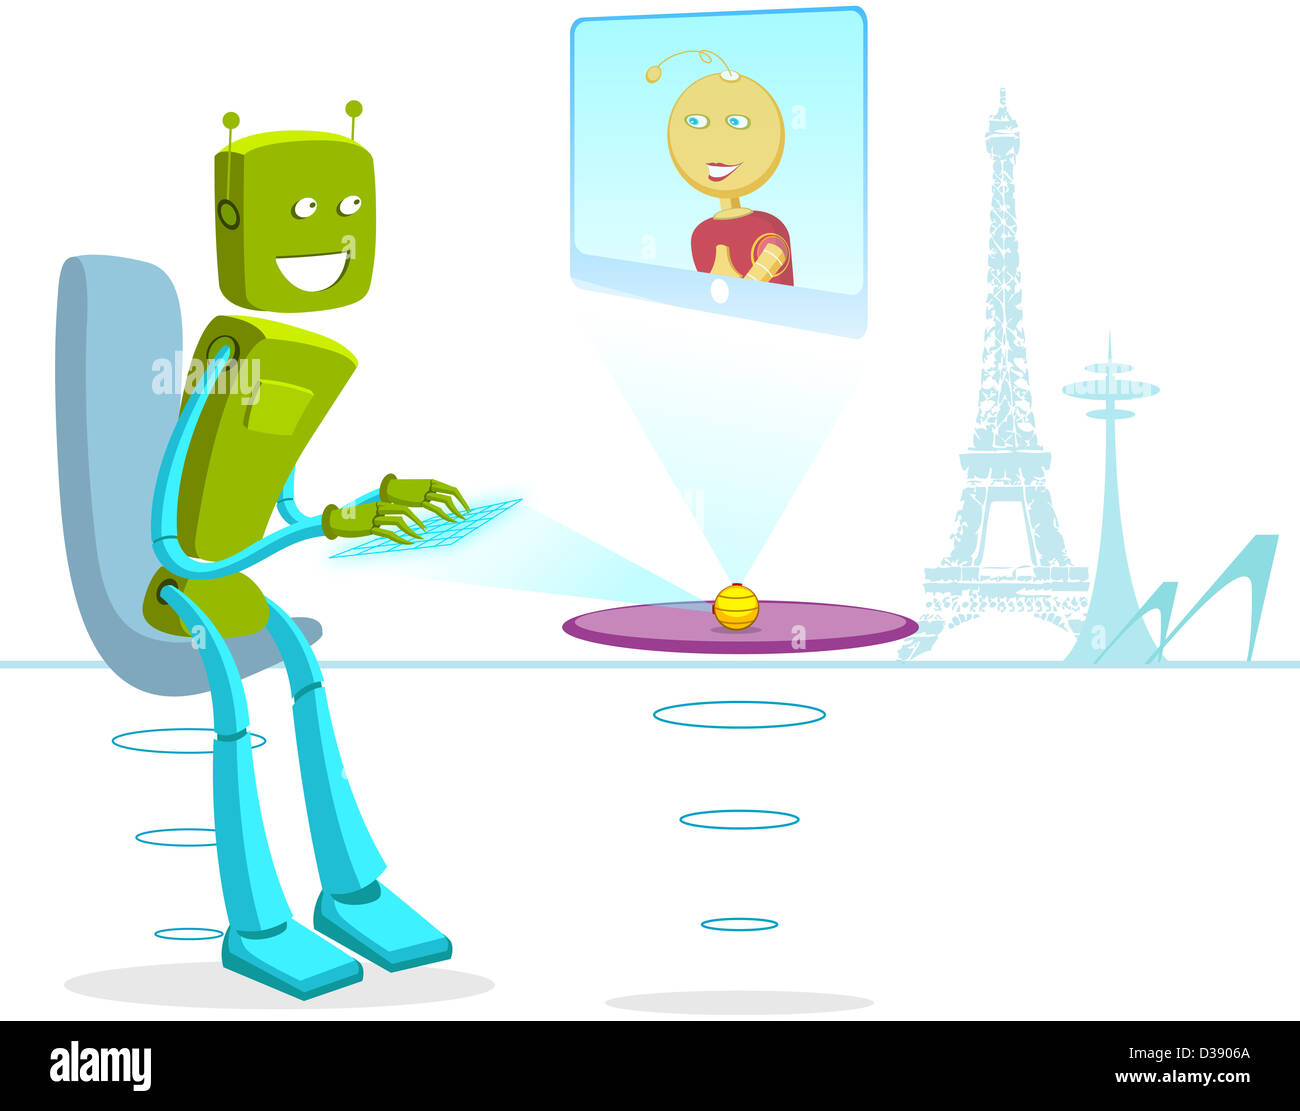 Robot chatting online Stock Photo